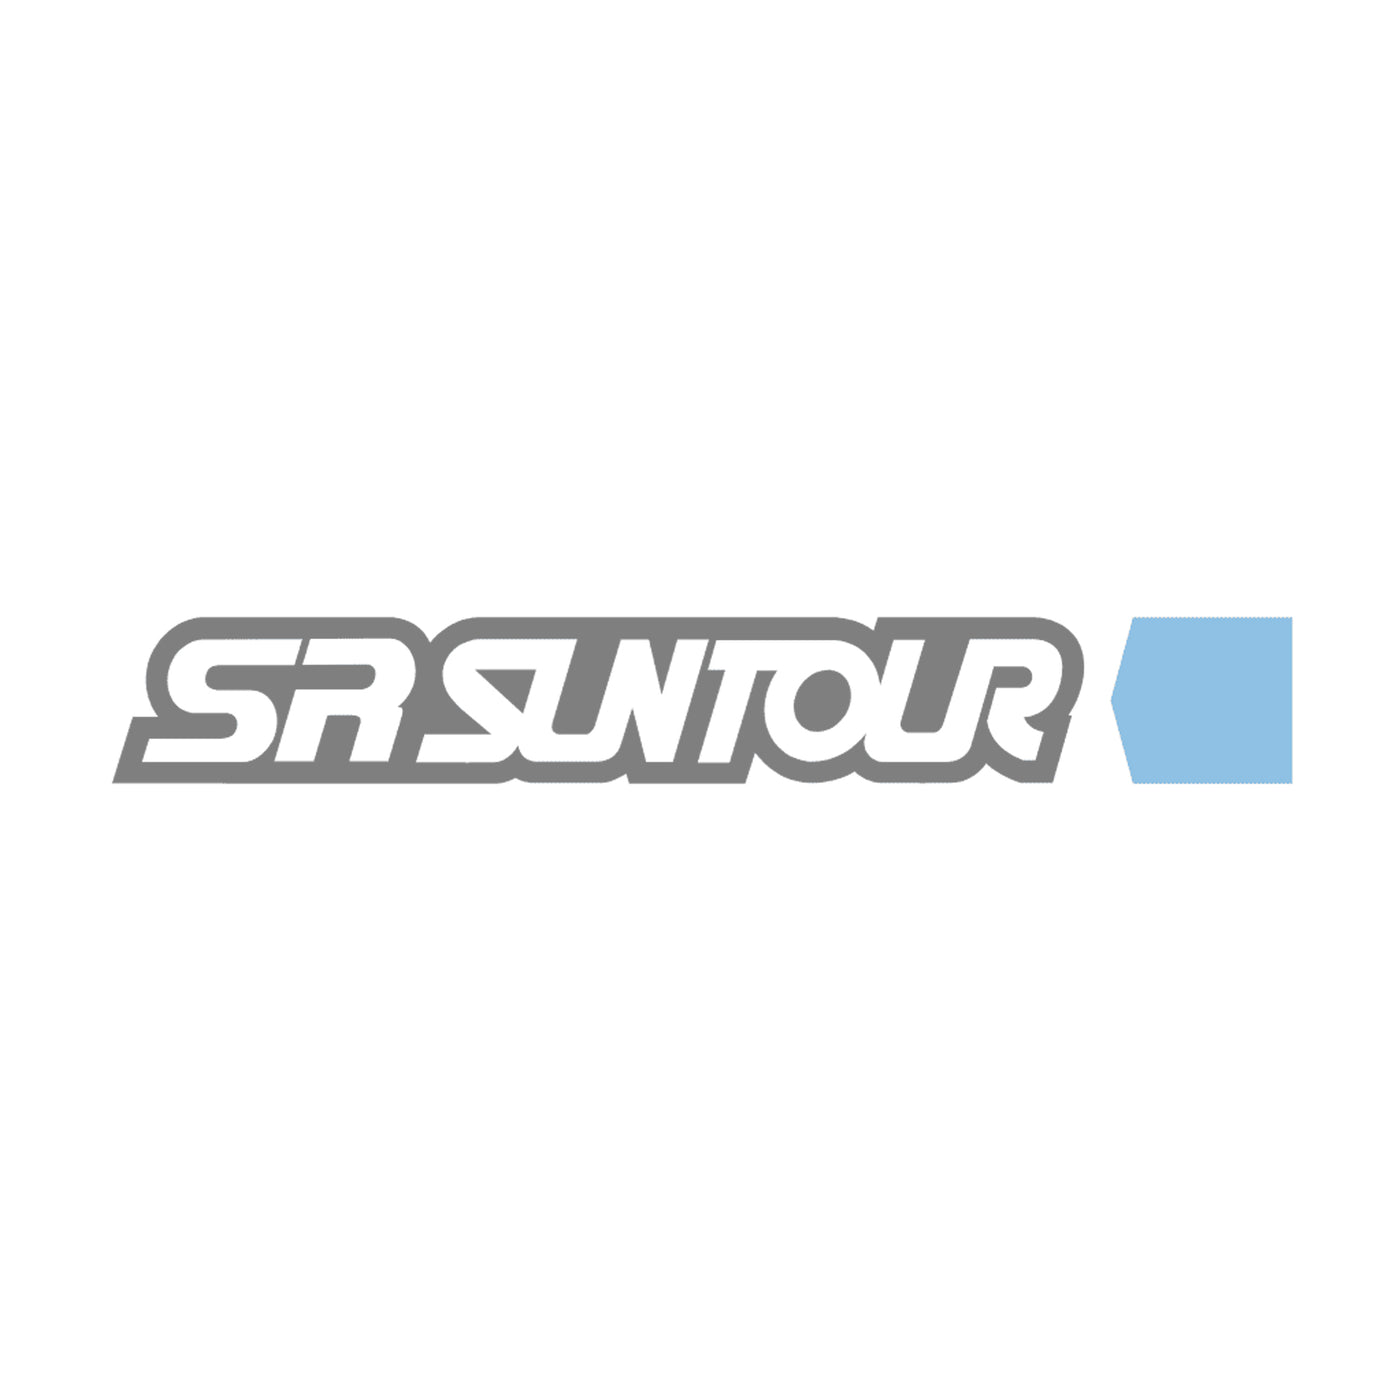 SR Suntour Triair rebuild kit